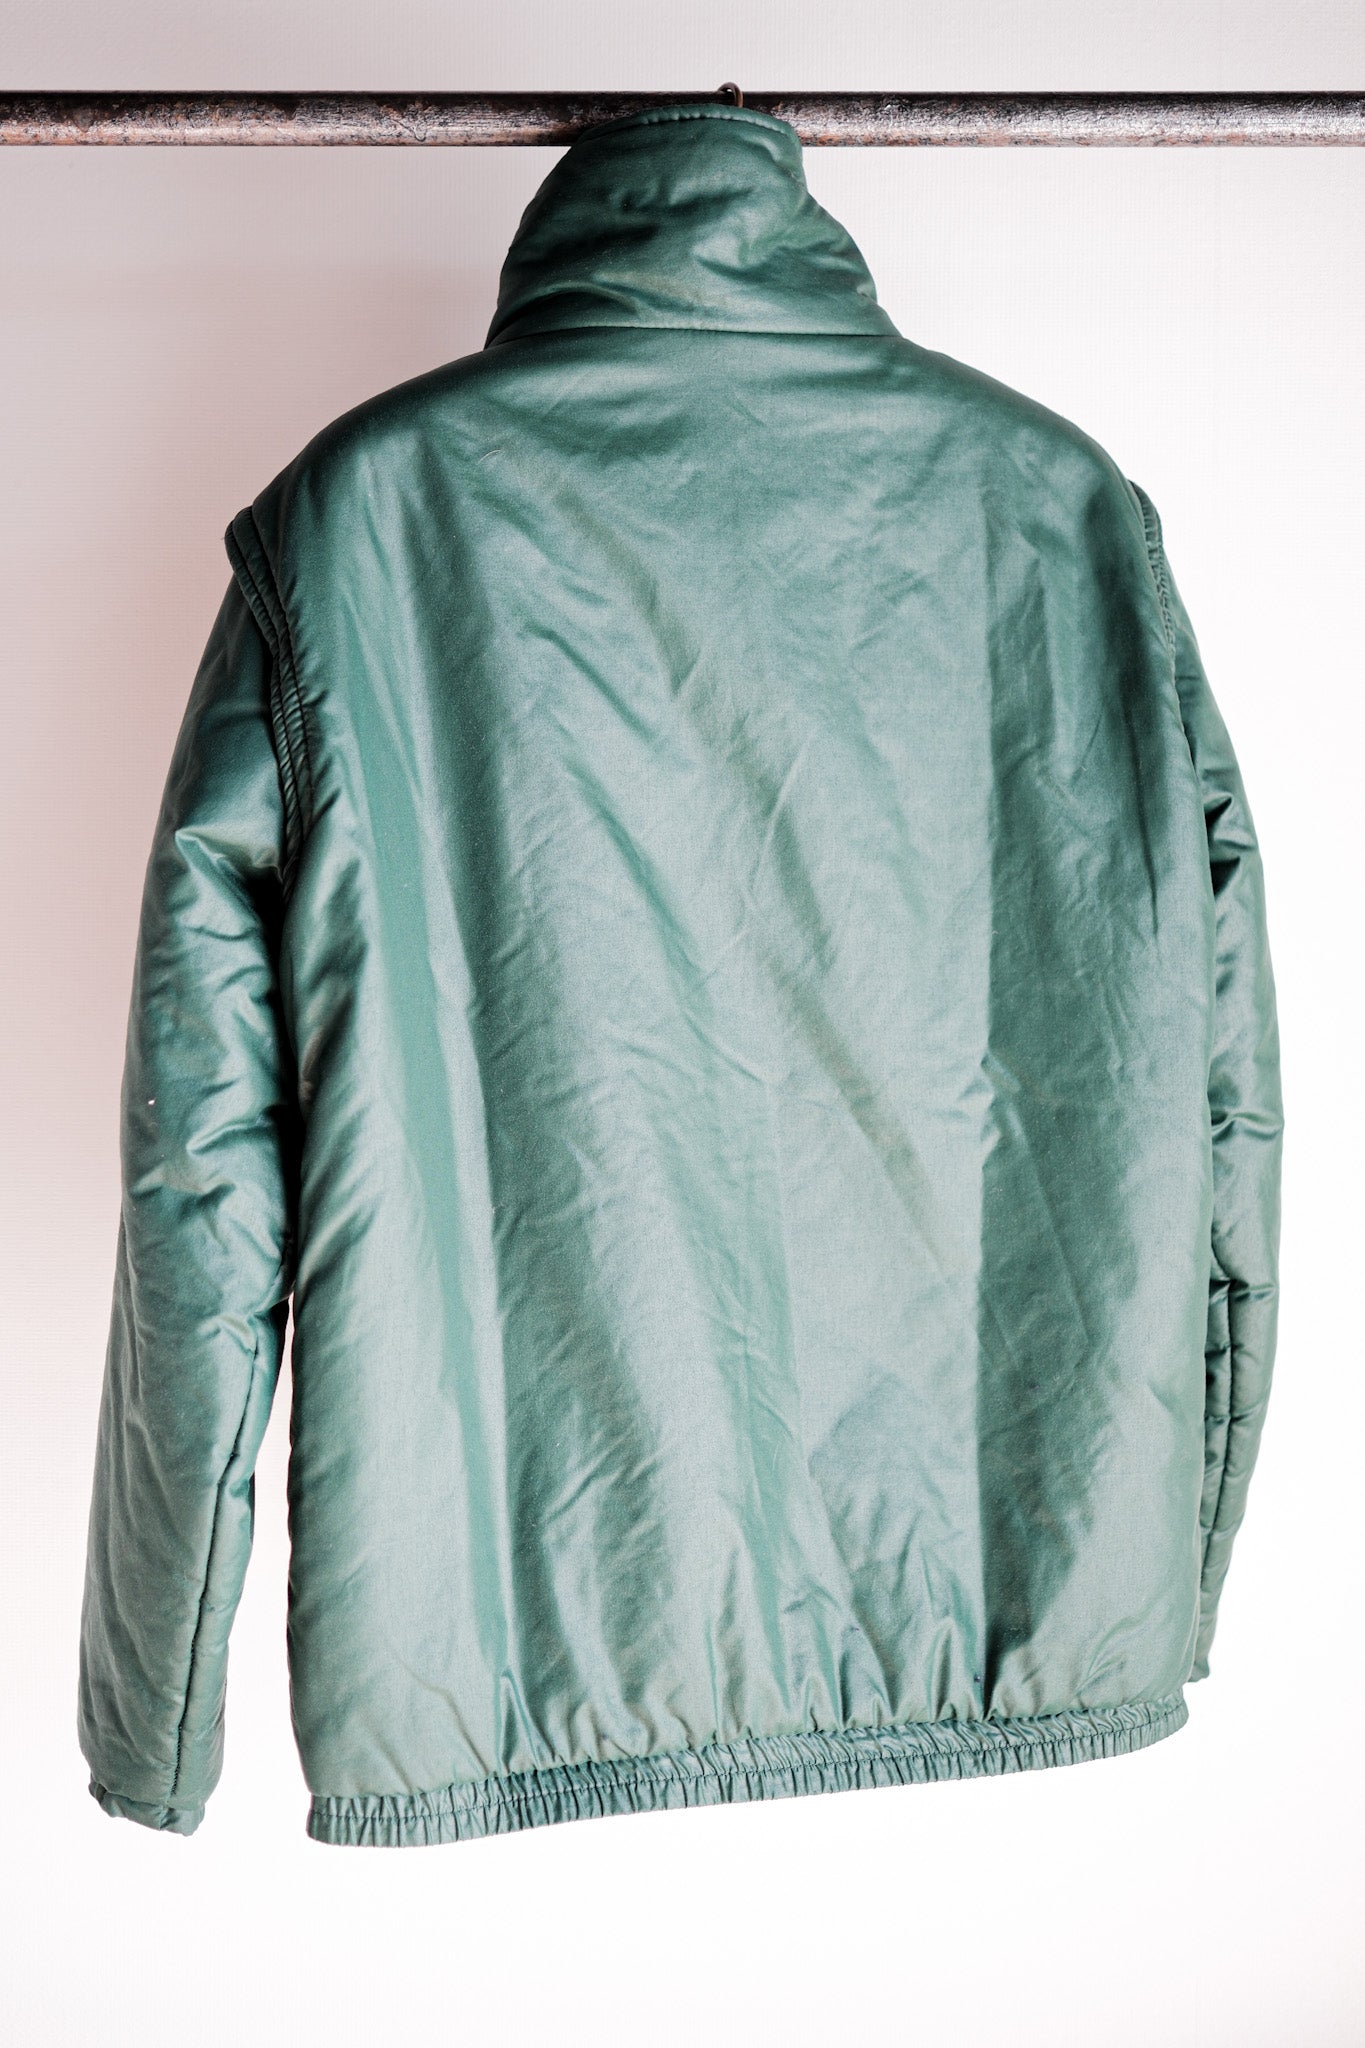 【~80's】Old Hermès Paris Plein Air 2-Way Jacket